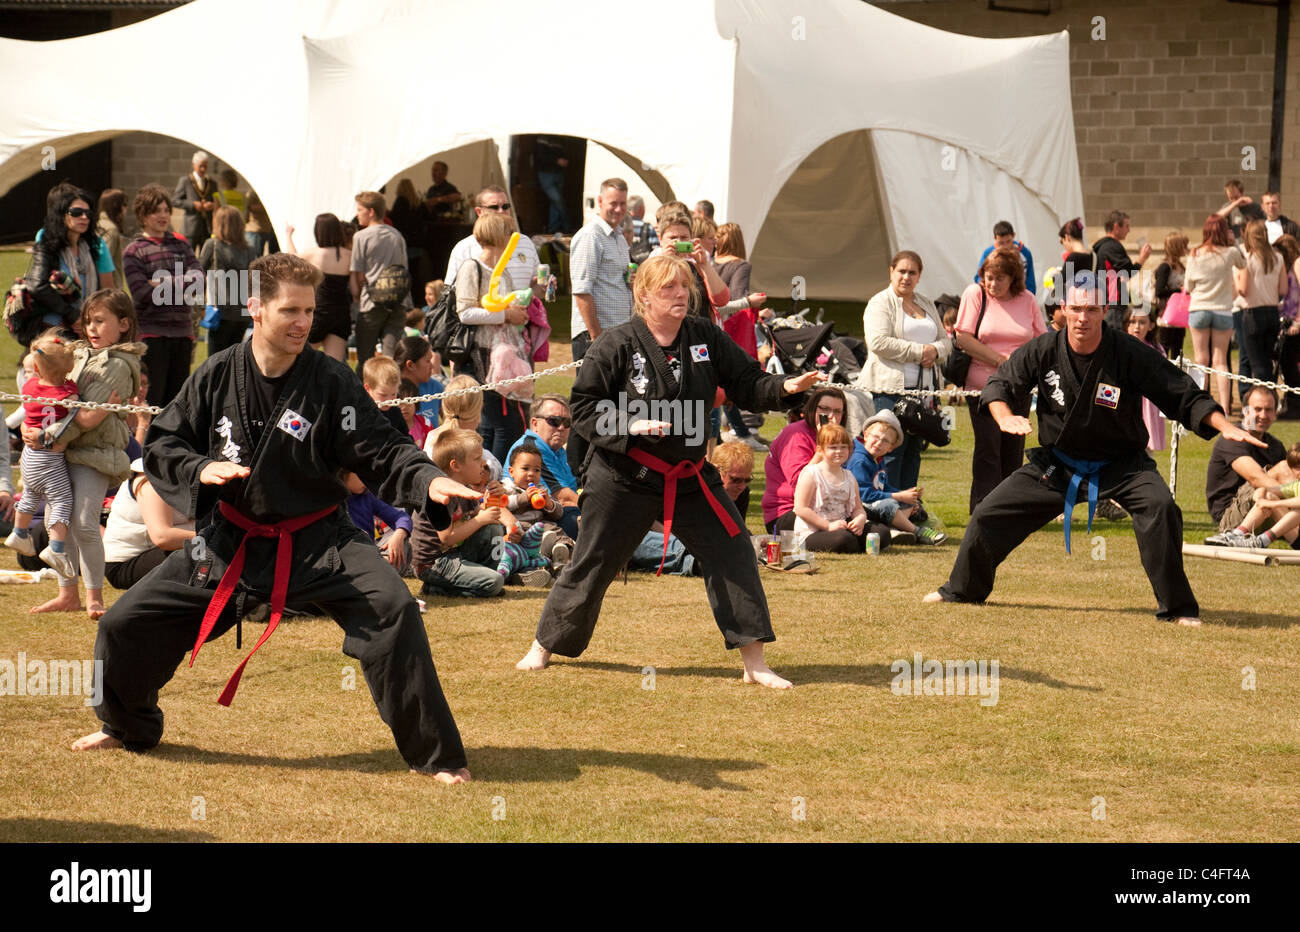 a demonstration of the Korean martial art of Kuk Sool Won, Newmarket carnival, Suffolk UK Stock Photo